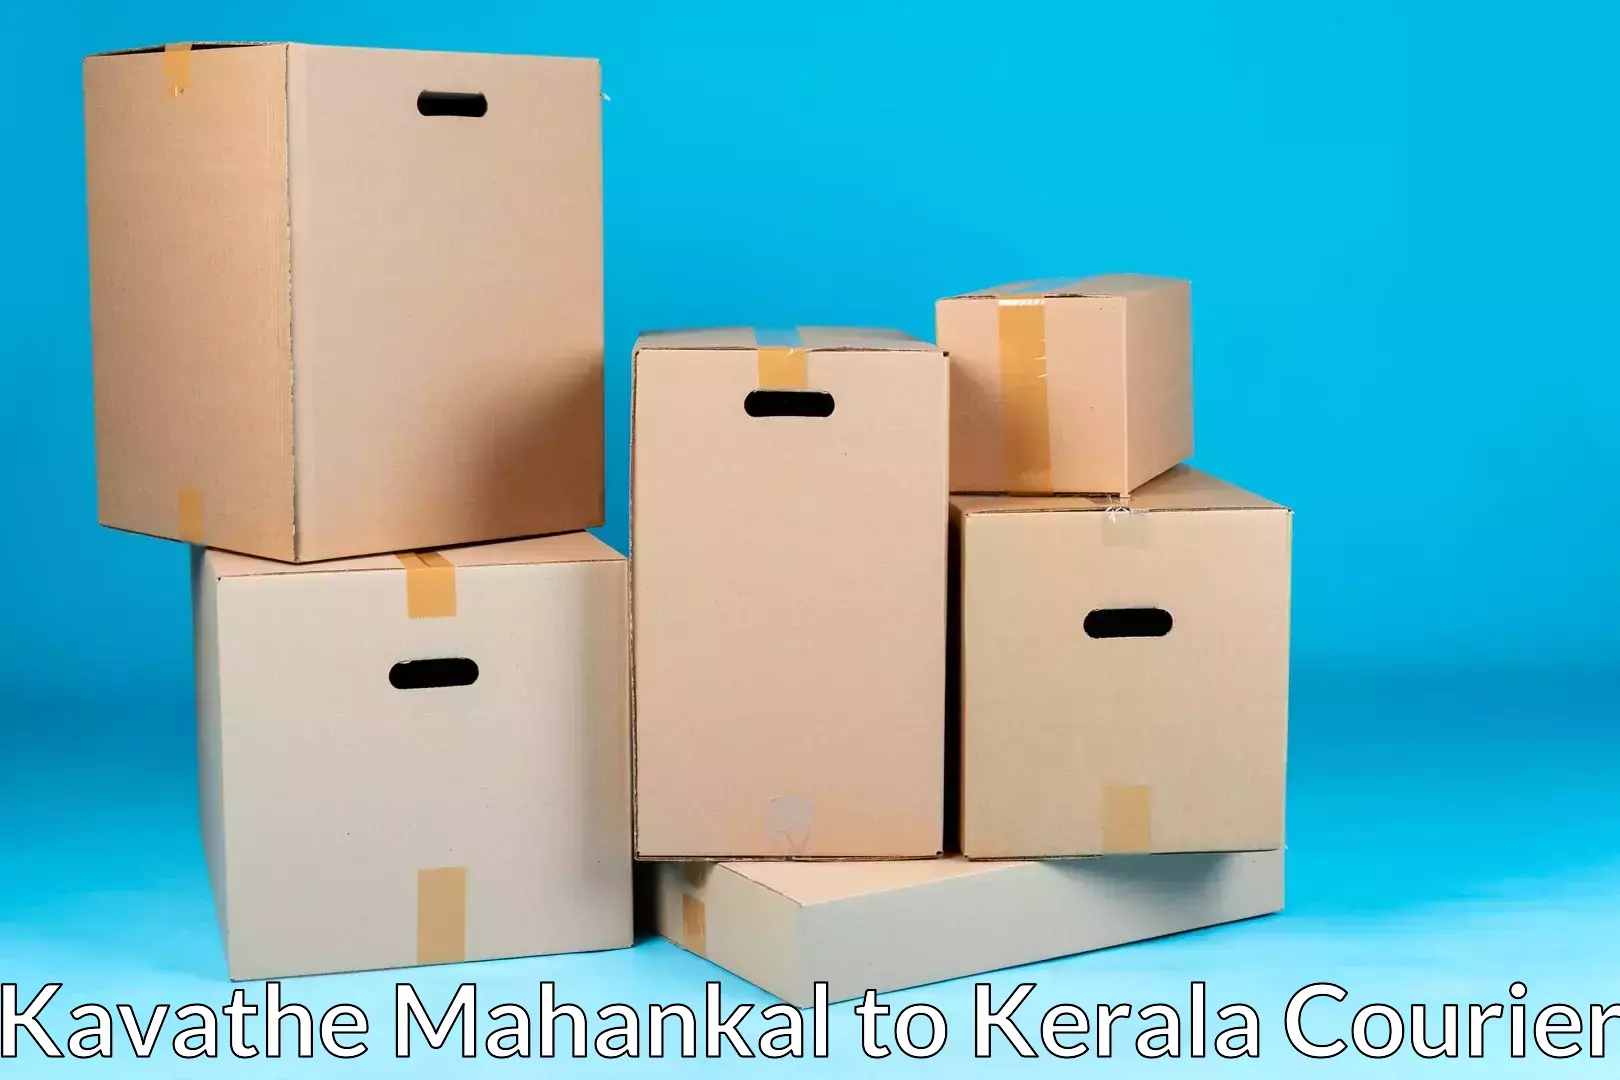 Professional relocation services Kavathe Mahankal to Malappuram